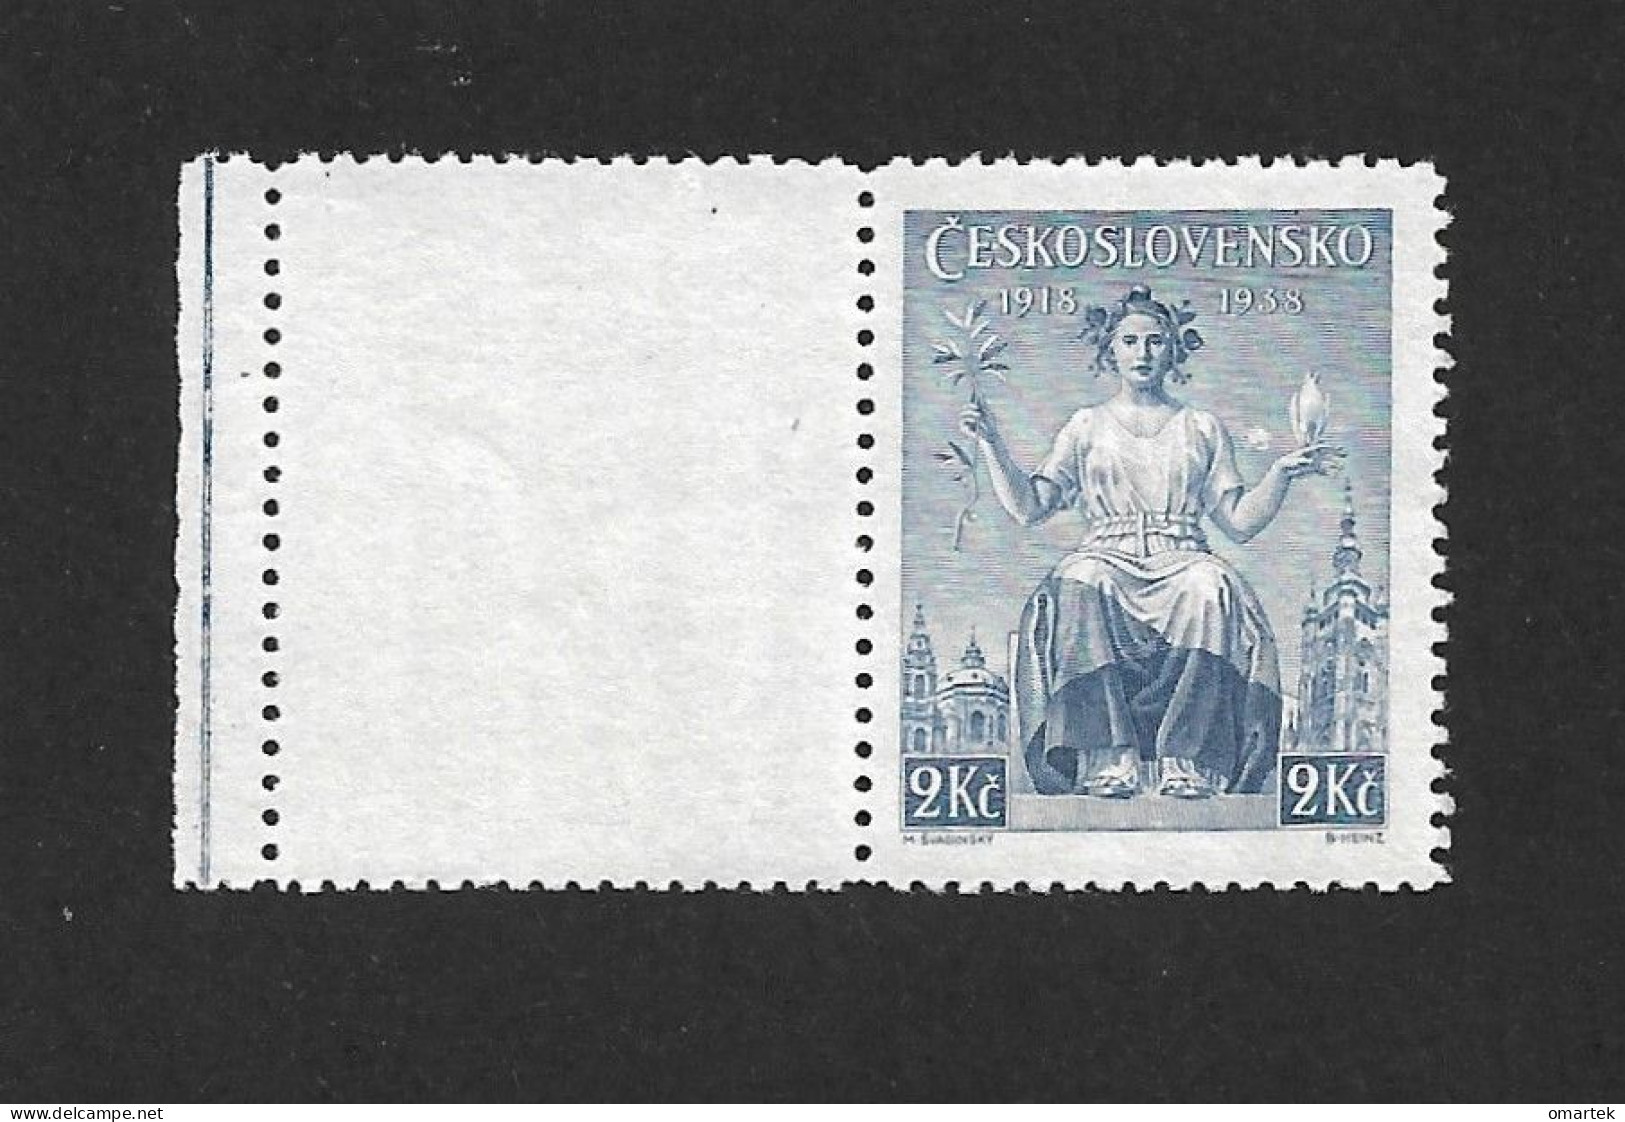 Czechoslovakia 1938 MNH ** Mi 404 Zf L Sc 254 Alegory Of The Republic With Coupon. Tschechoslowakei C1 - Neufs